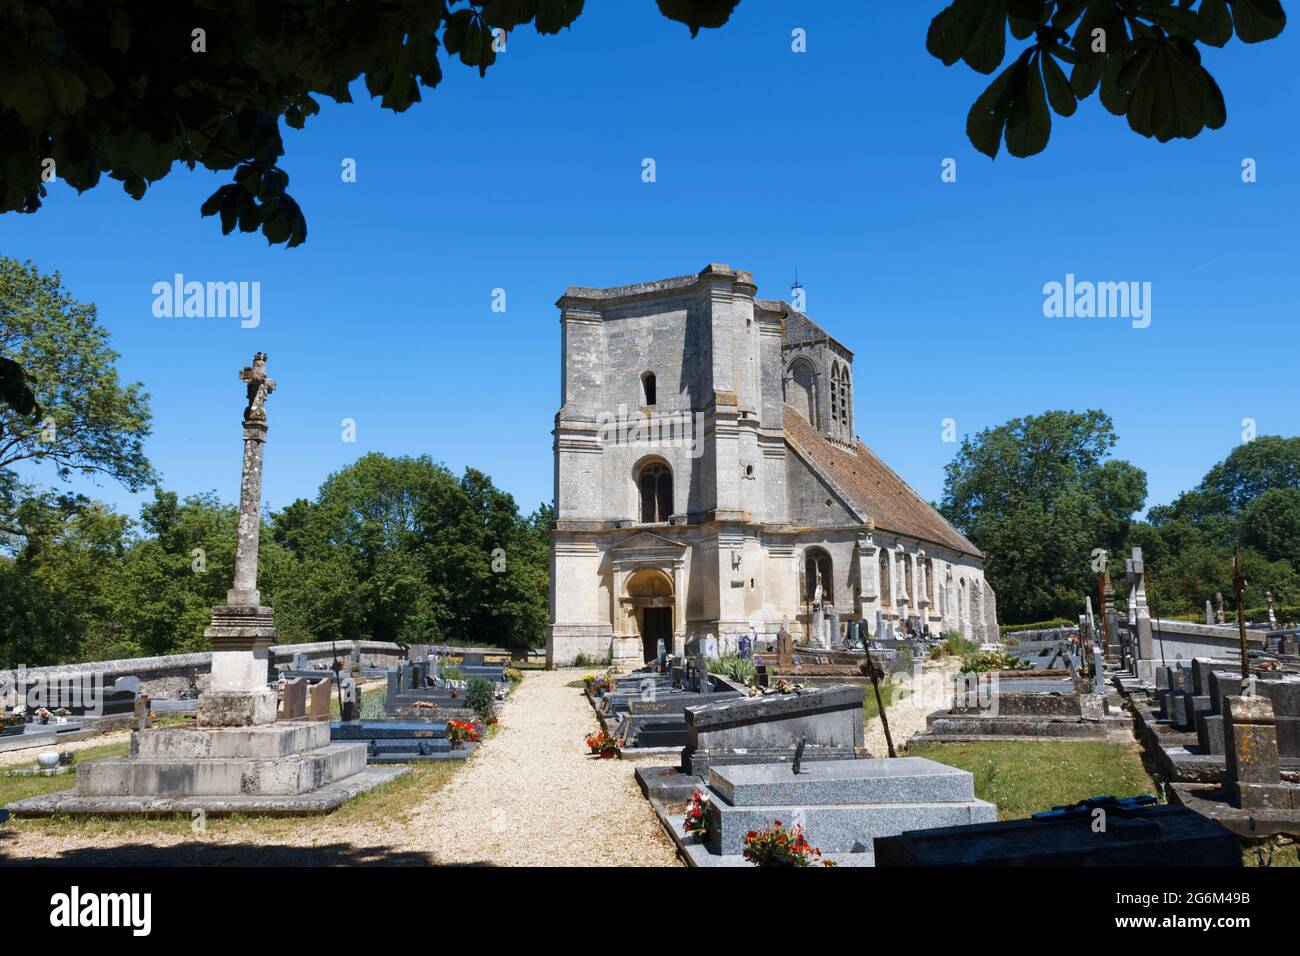 Saint-Quentin church at Nucourt, Val d'Oise, France Stock Photo